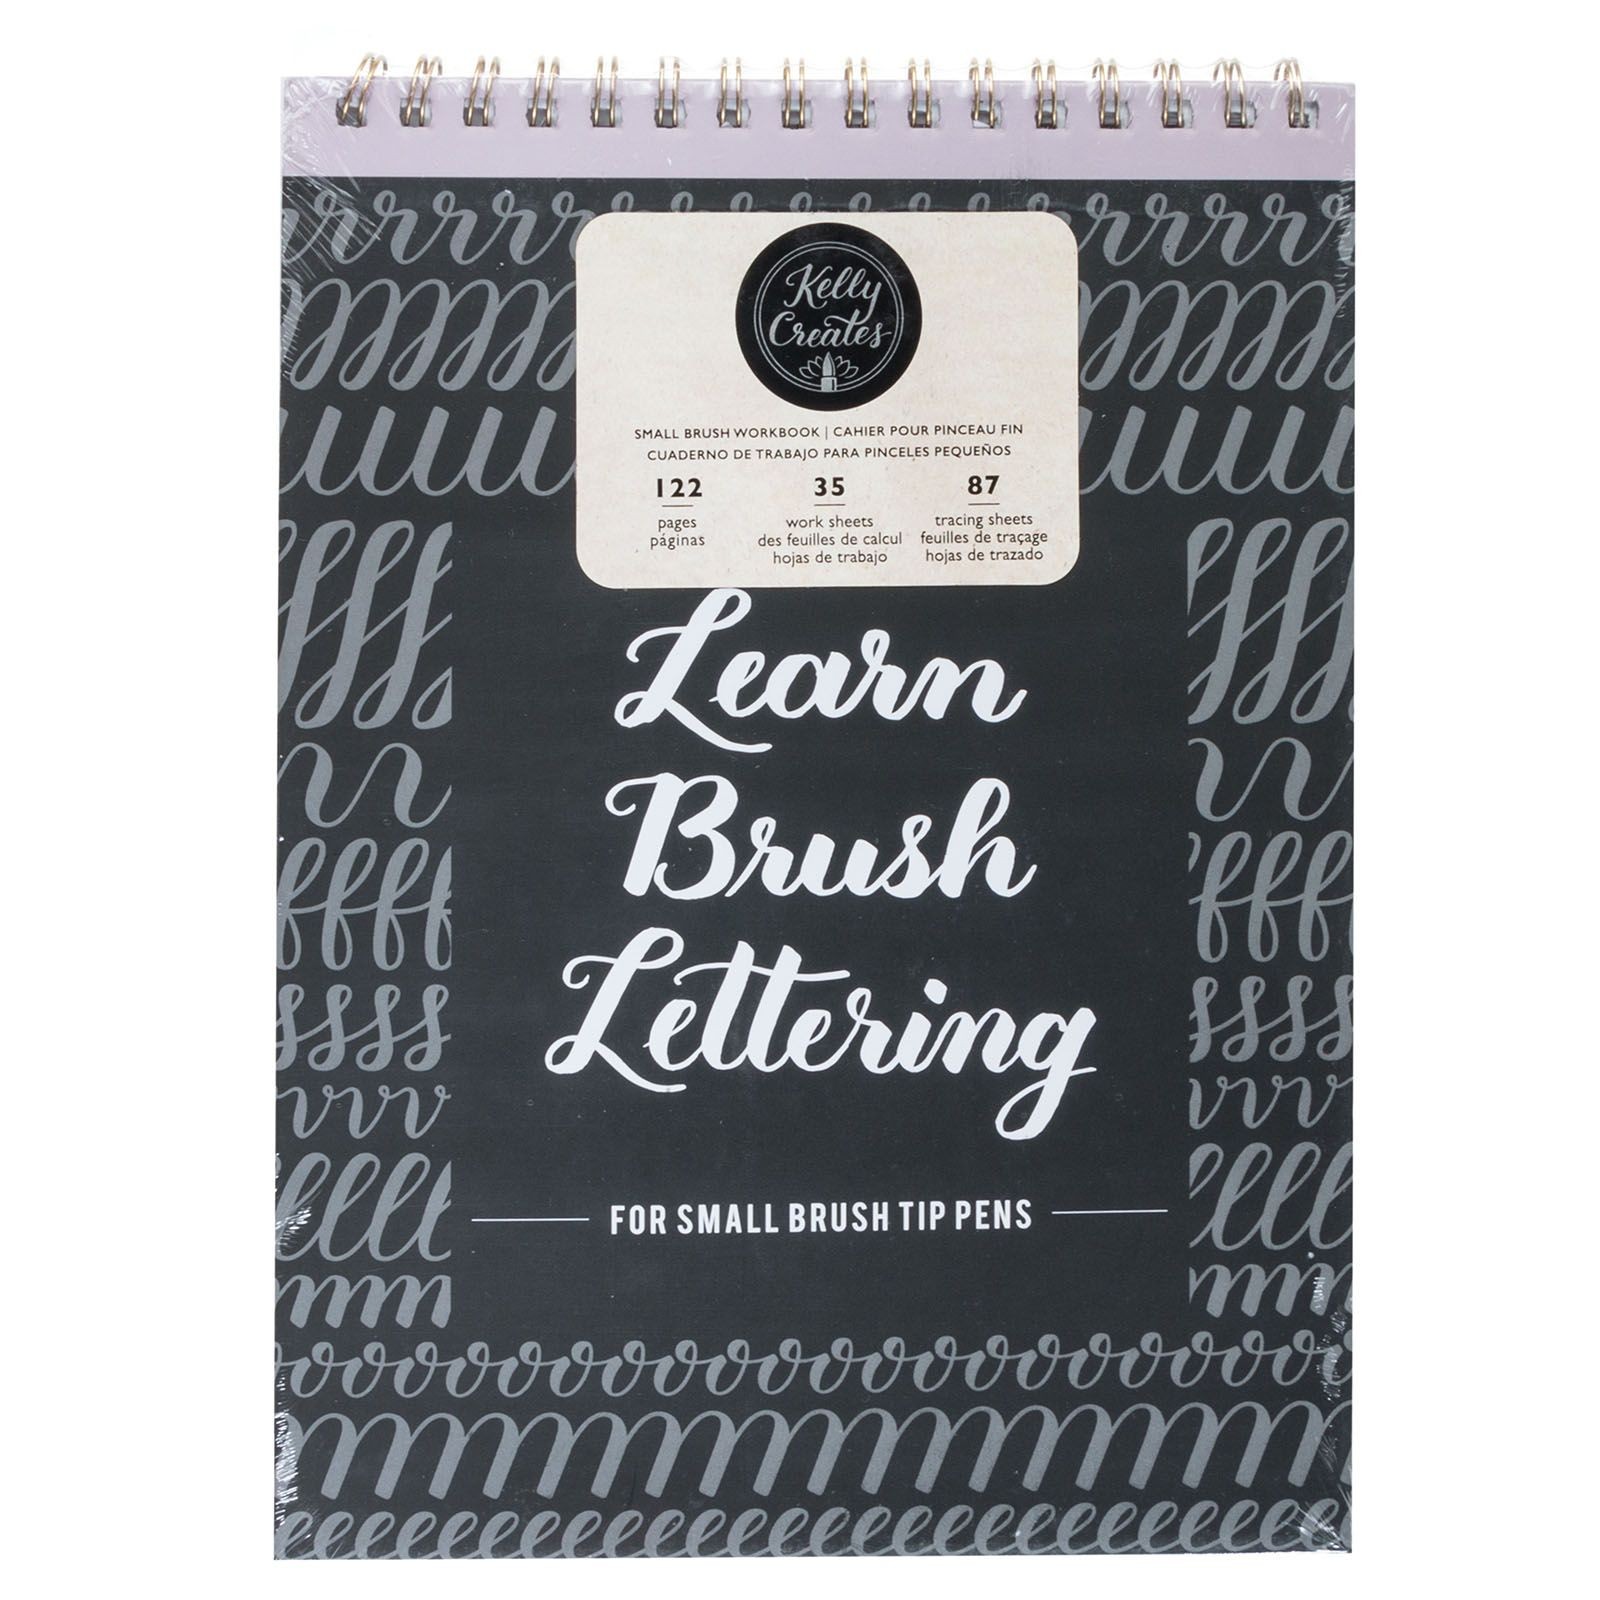 Learn Brush Lettering Kelly Creates small brush workbook 122 Seiten